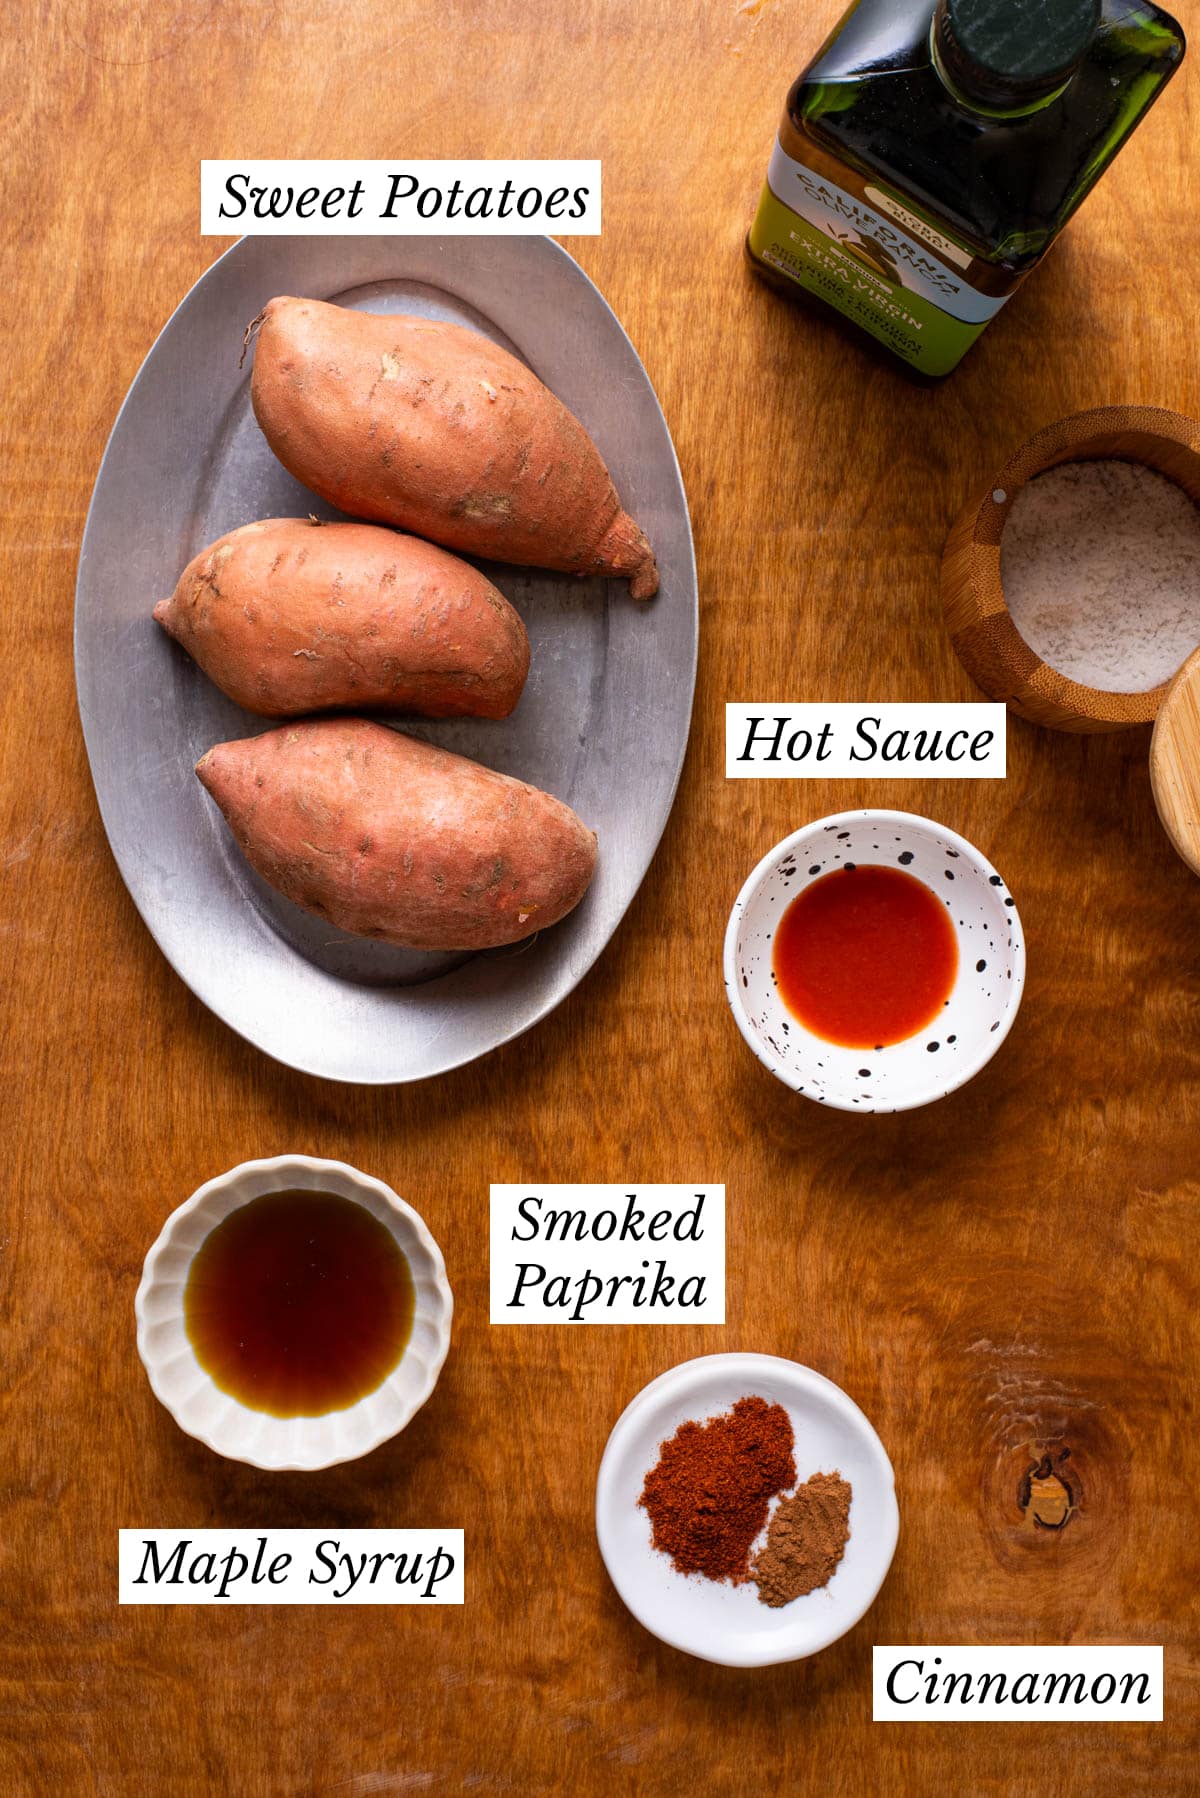 Ingredients gathered to make maple-glazed sweet potatoes.